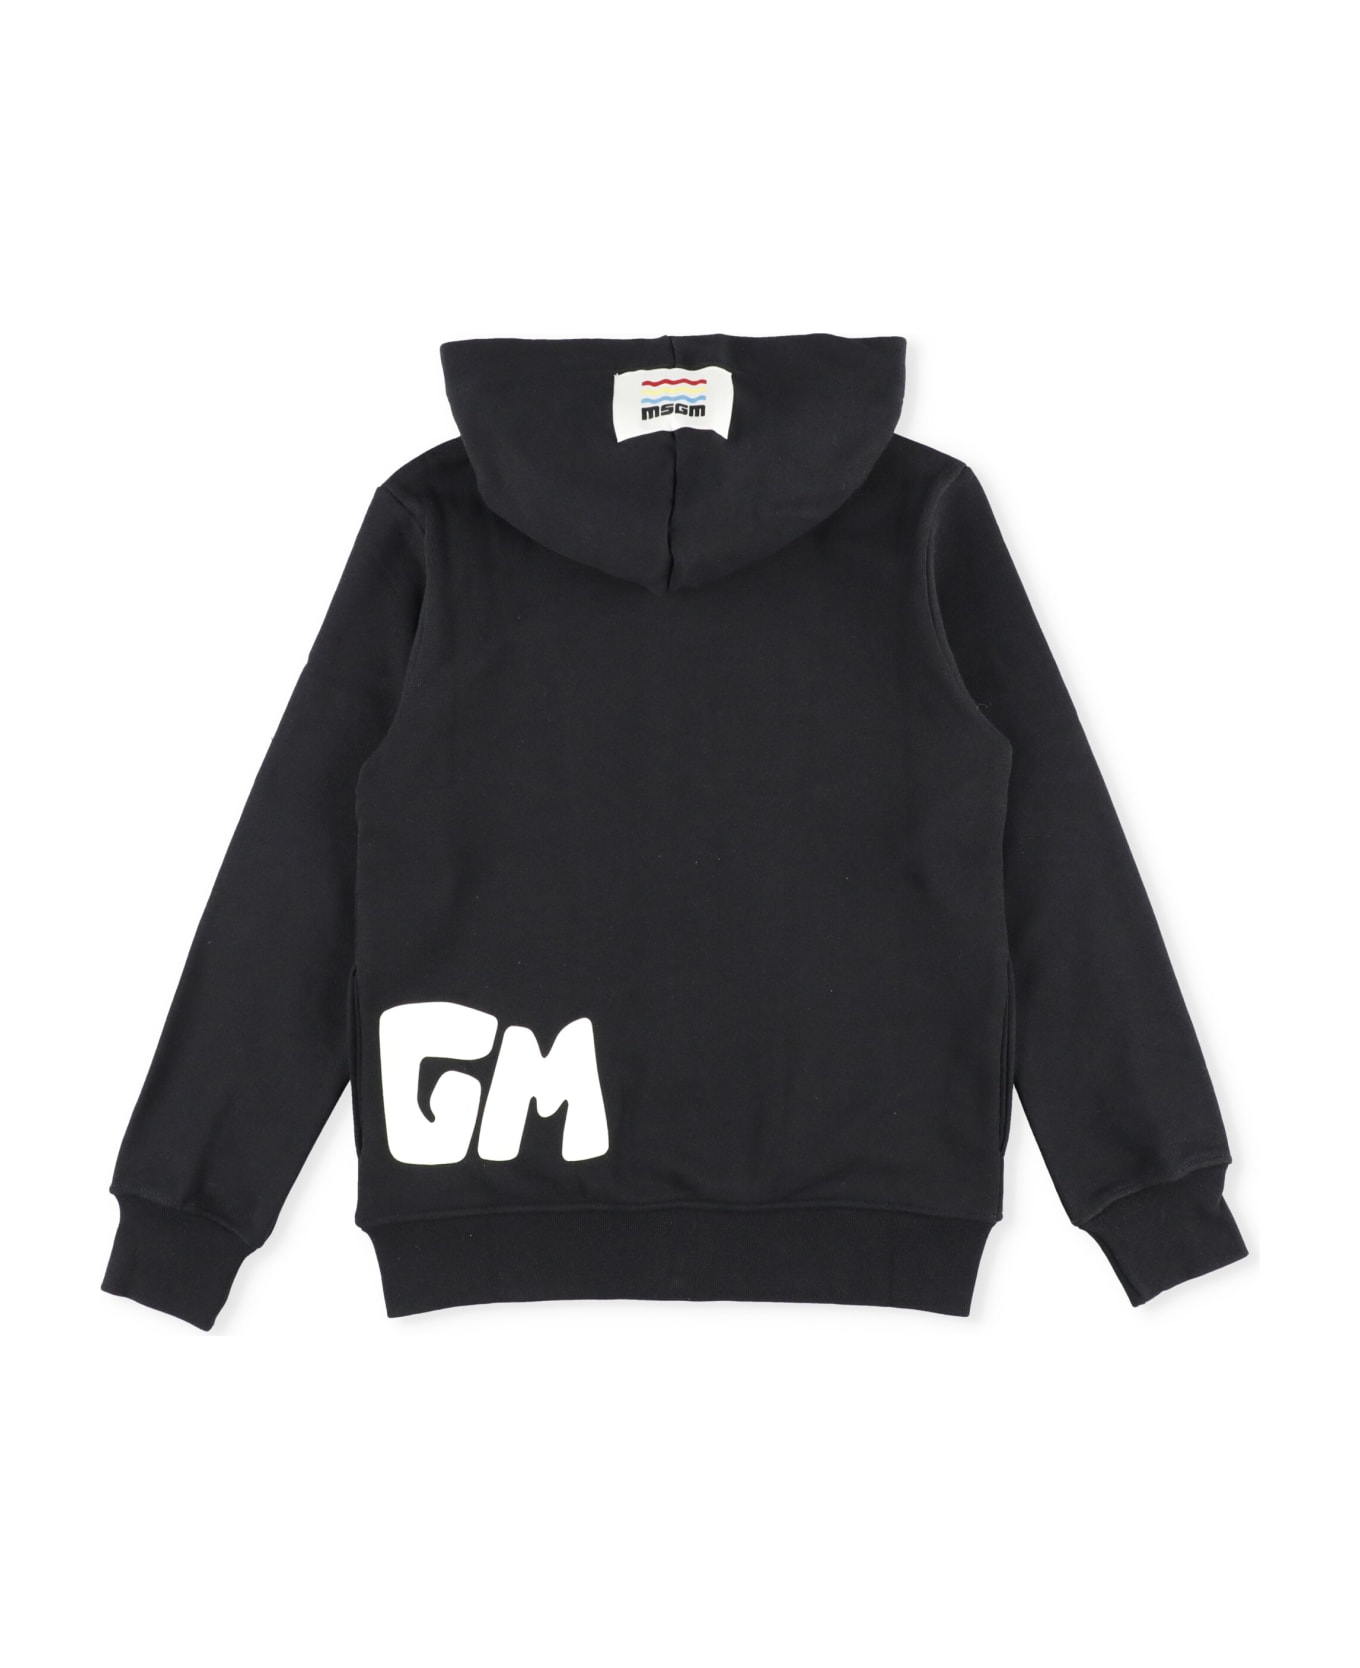 MSGM Sweatshirt With Logo - Nero/black